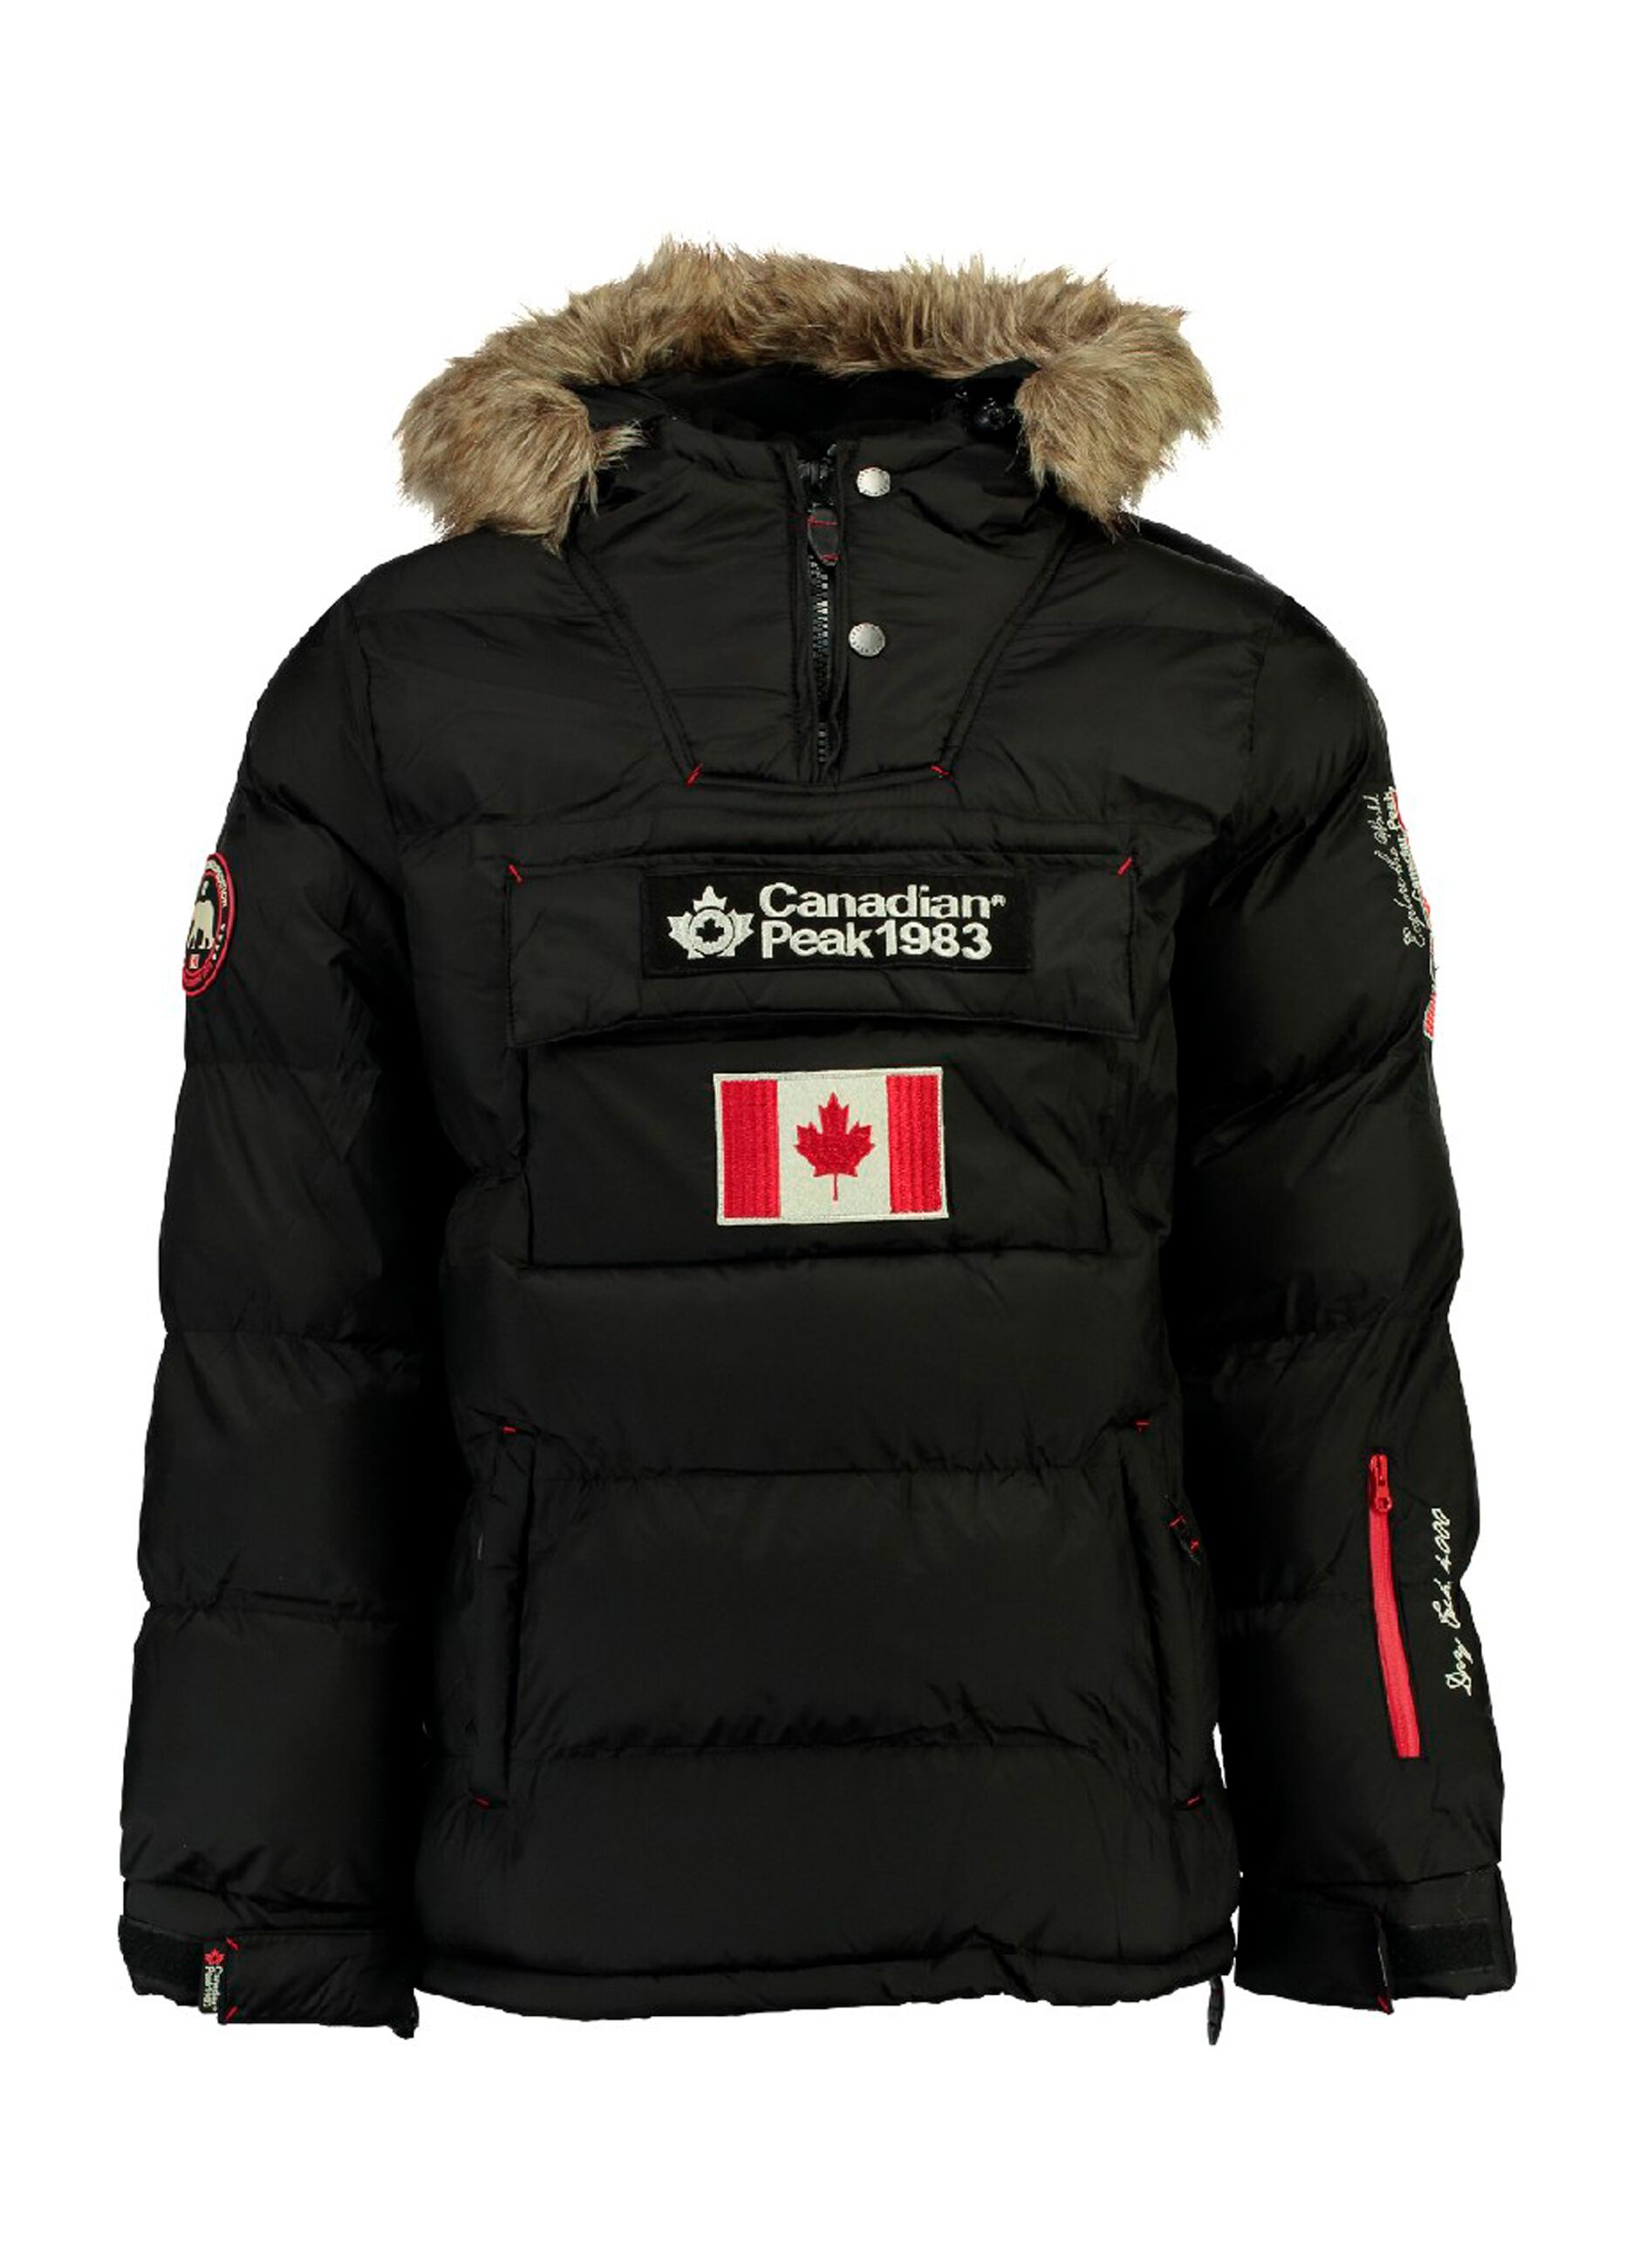 Canadian Peak down jacket with hood